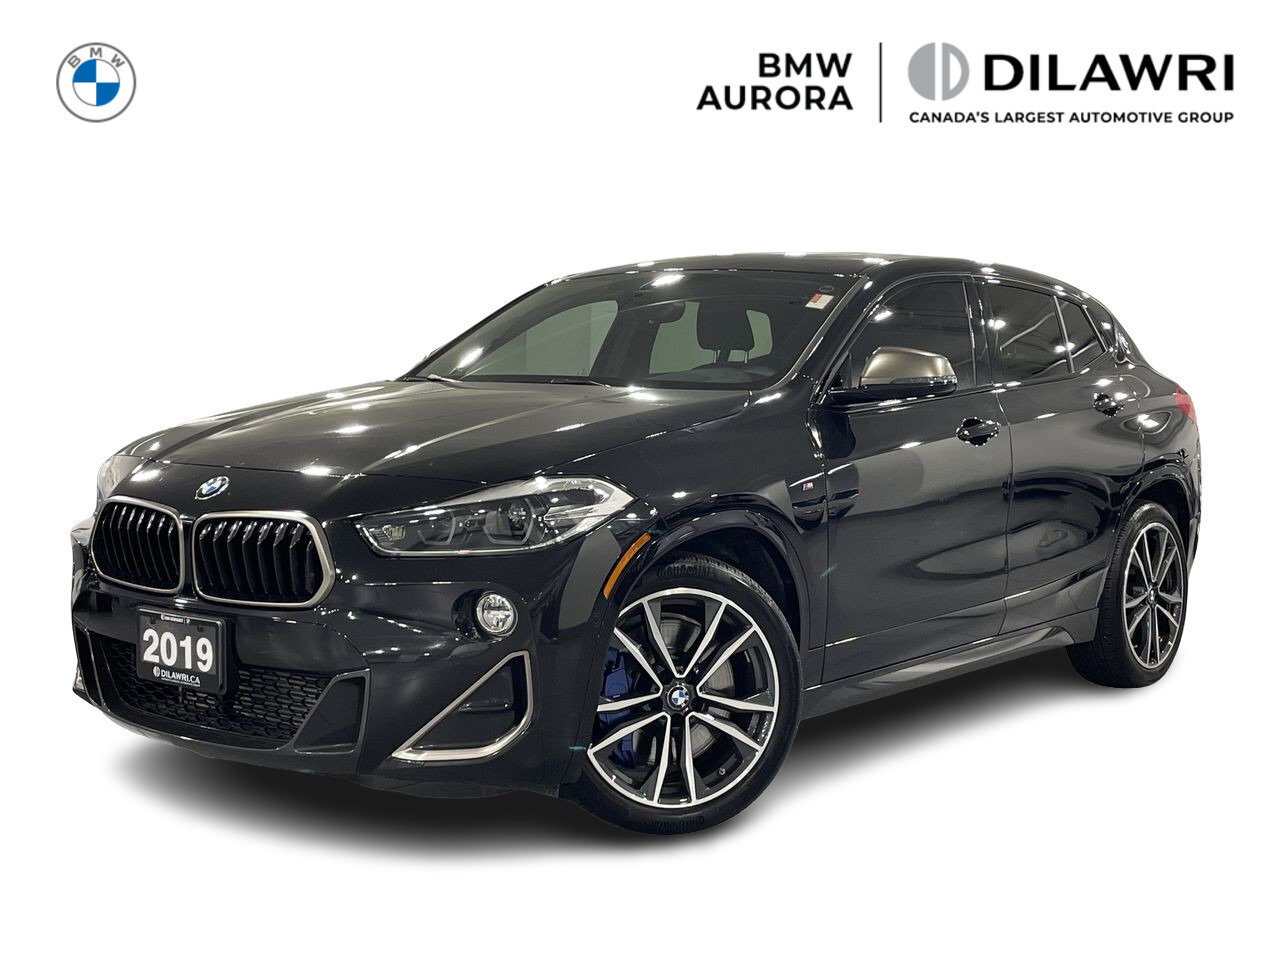 2019 BMW X2 M35i   Premium Package Enhanced | M Aerodynamics S